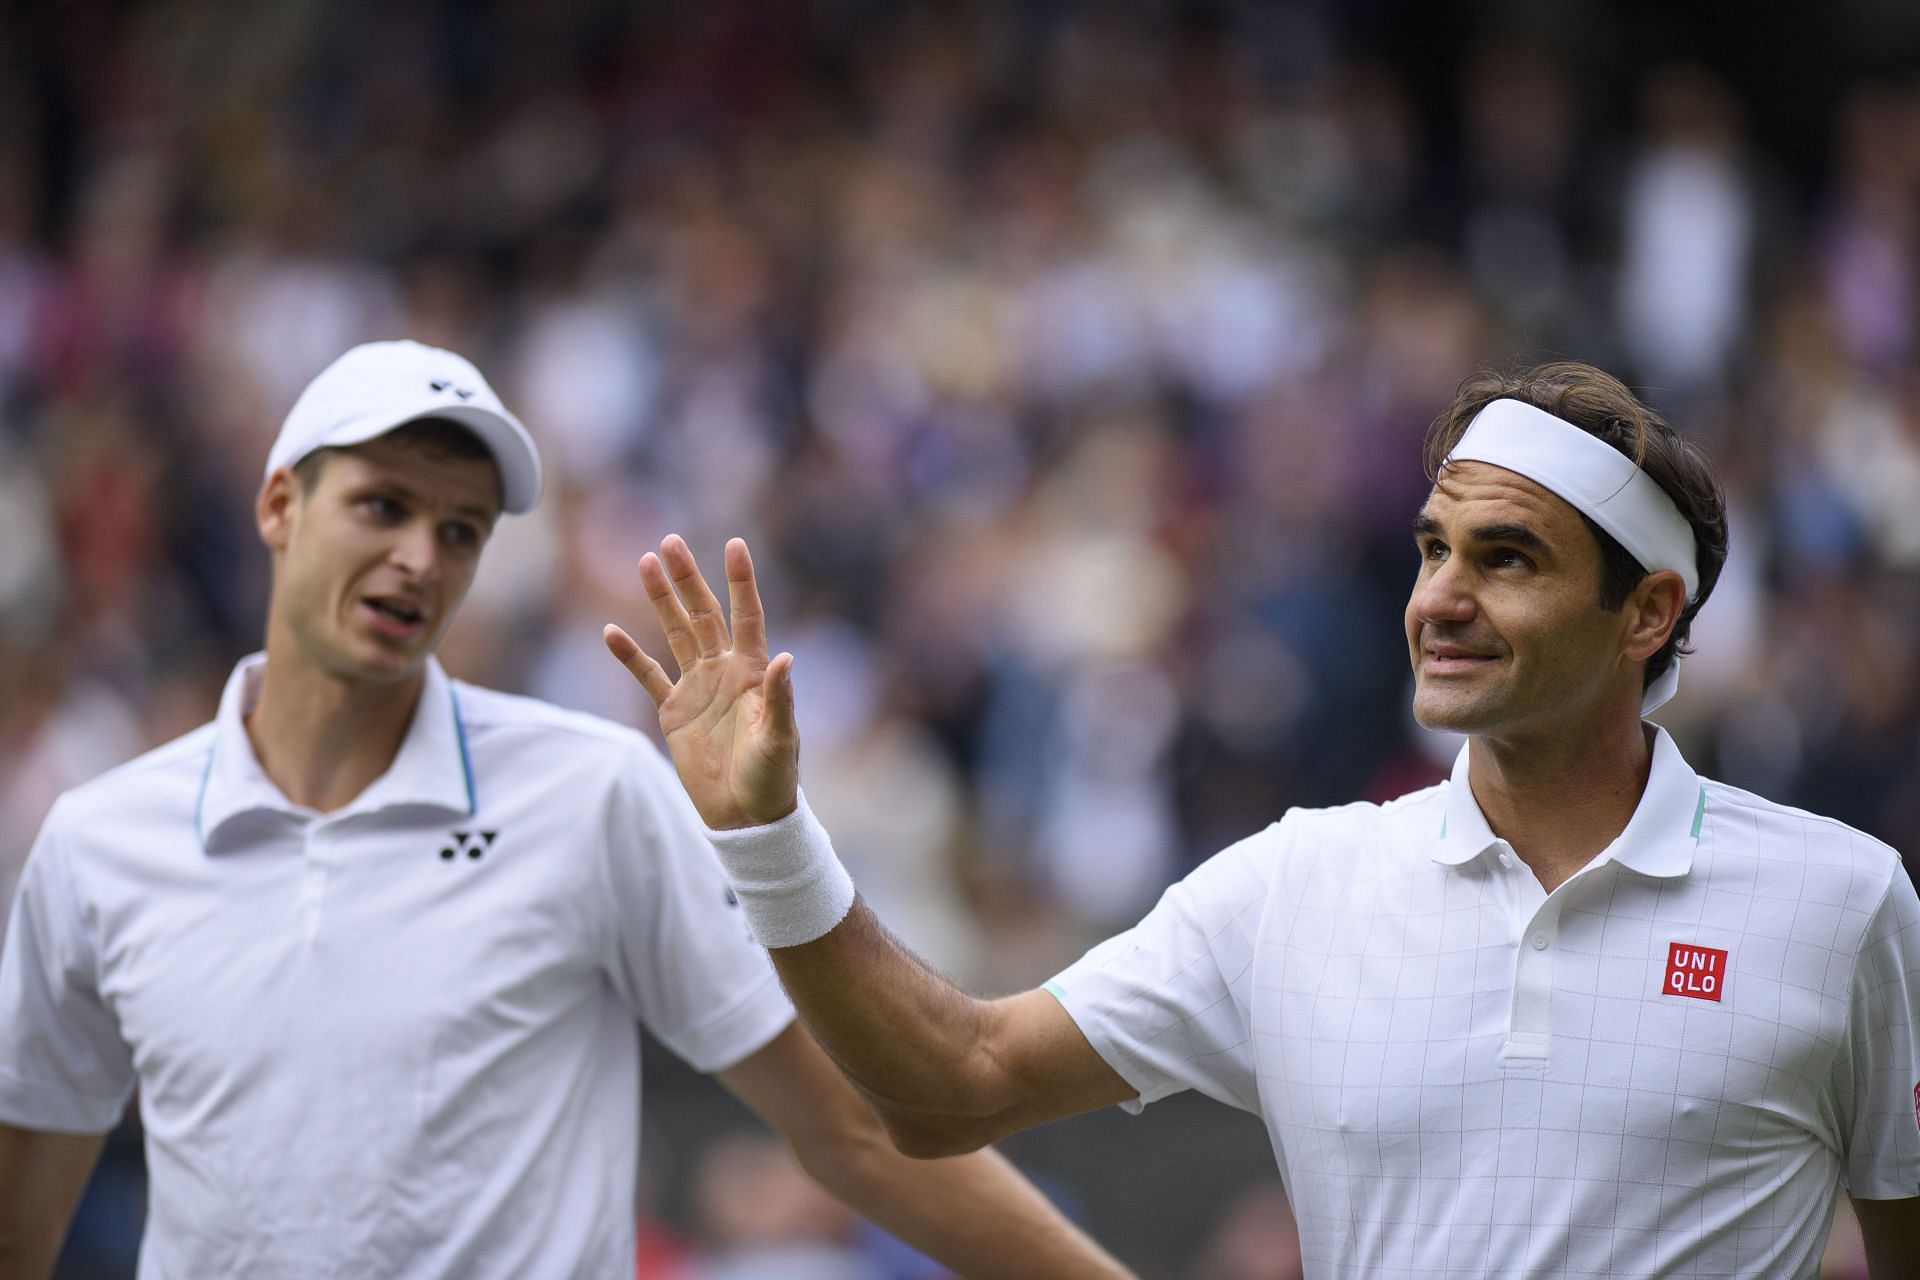 Roger Federer and Hubert Hurkacz after their showdown in the quarterfinals of Wimbledon 2021